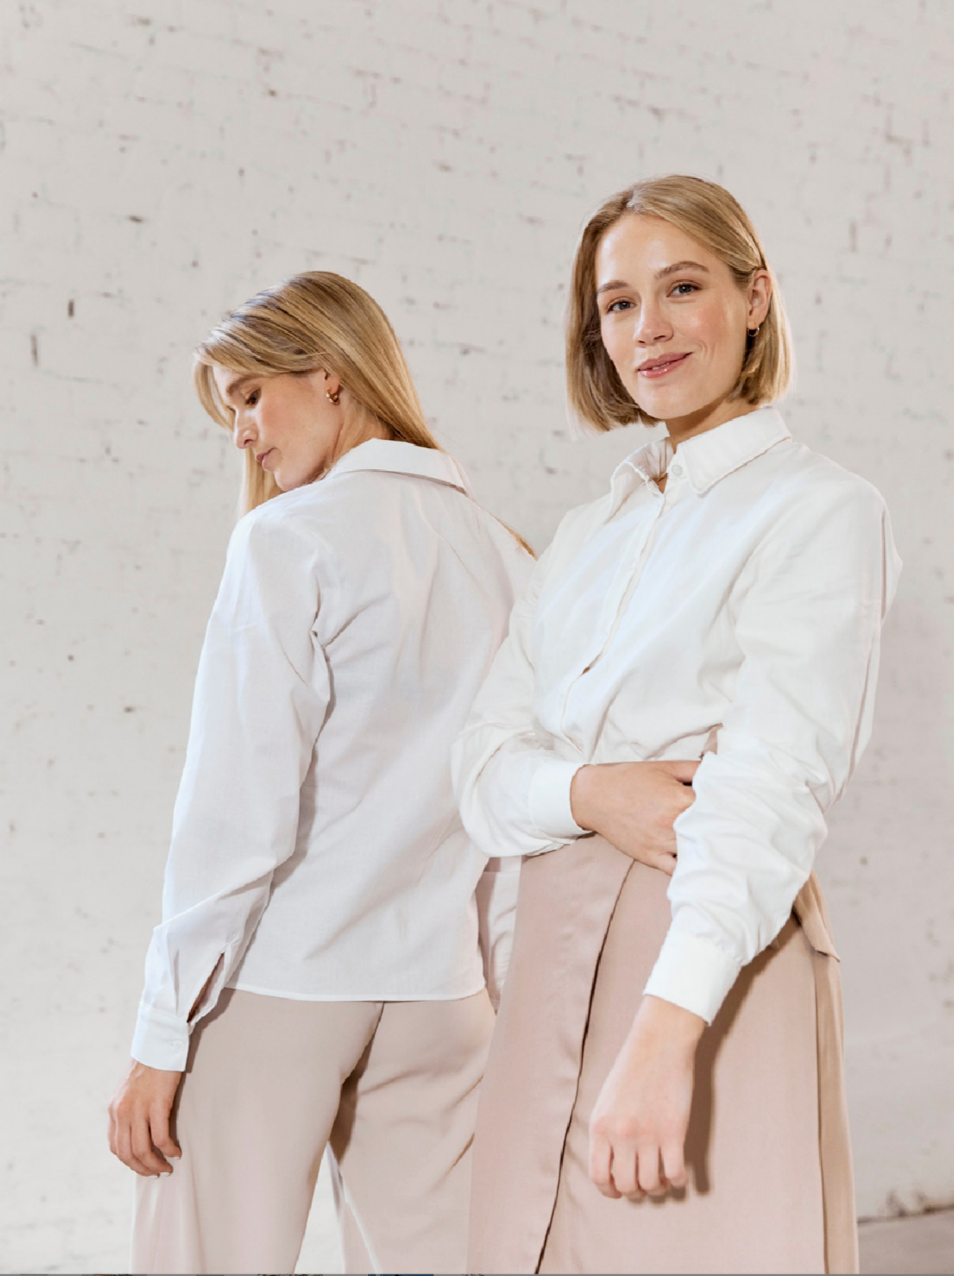 Sew Your Own Scandi Wardrobe Hardcover - Oda Stormoen and Kristin Vaag